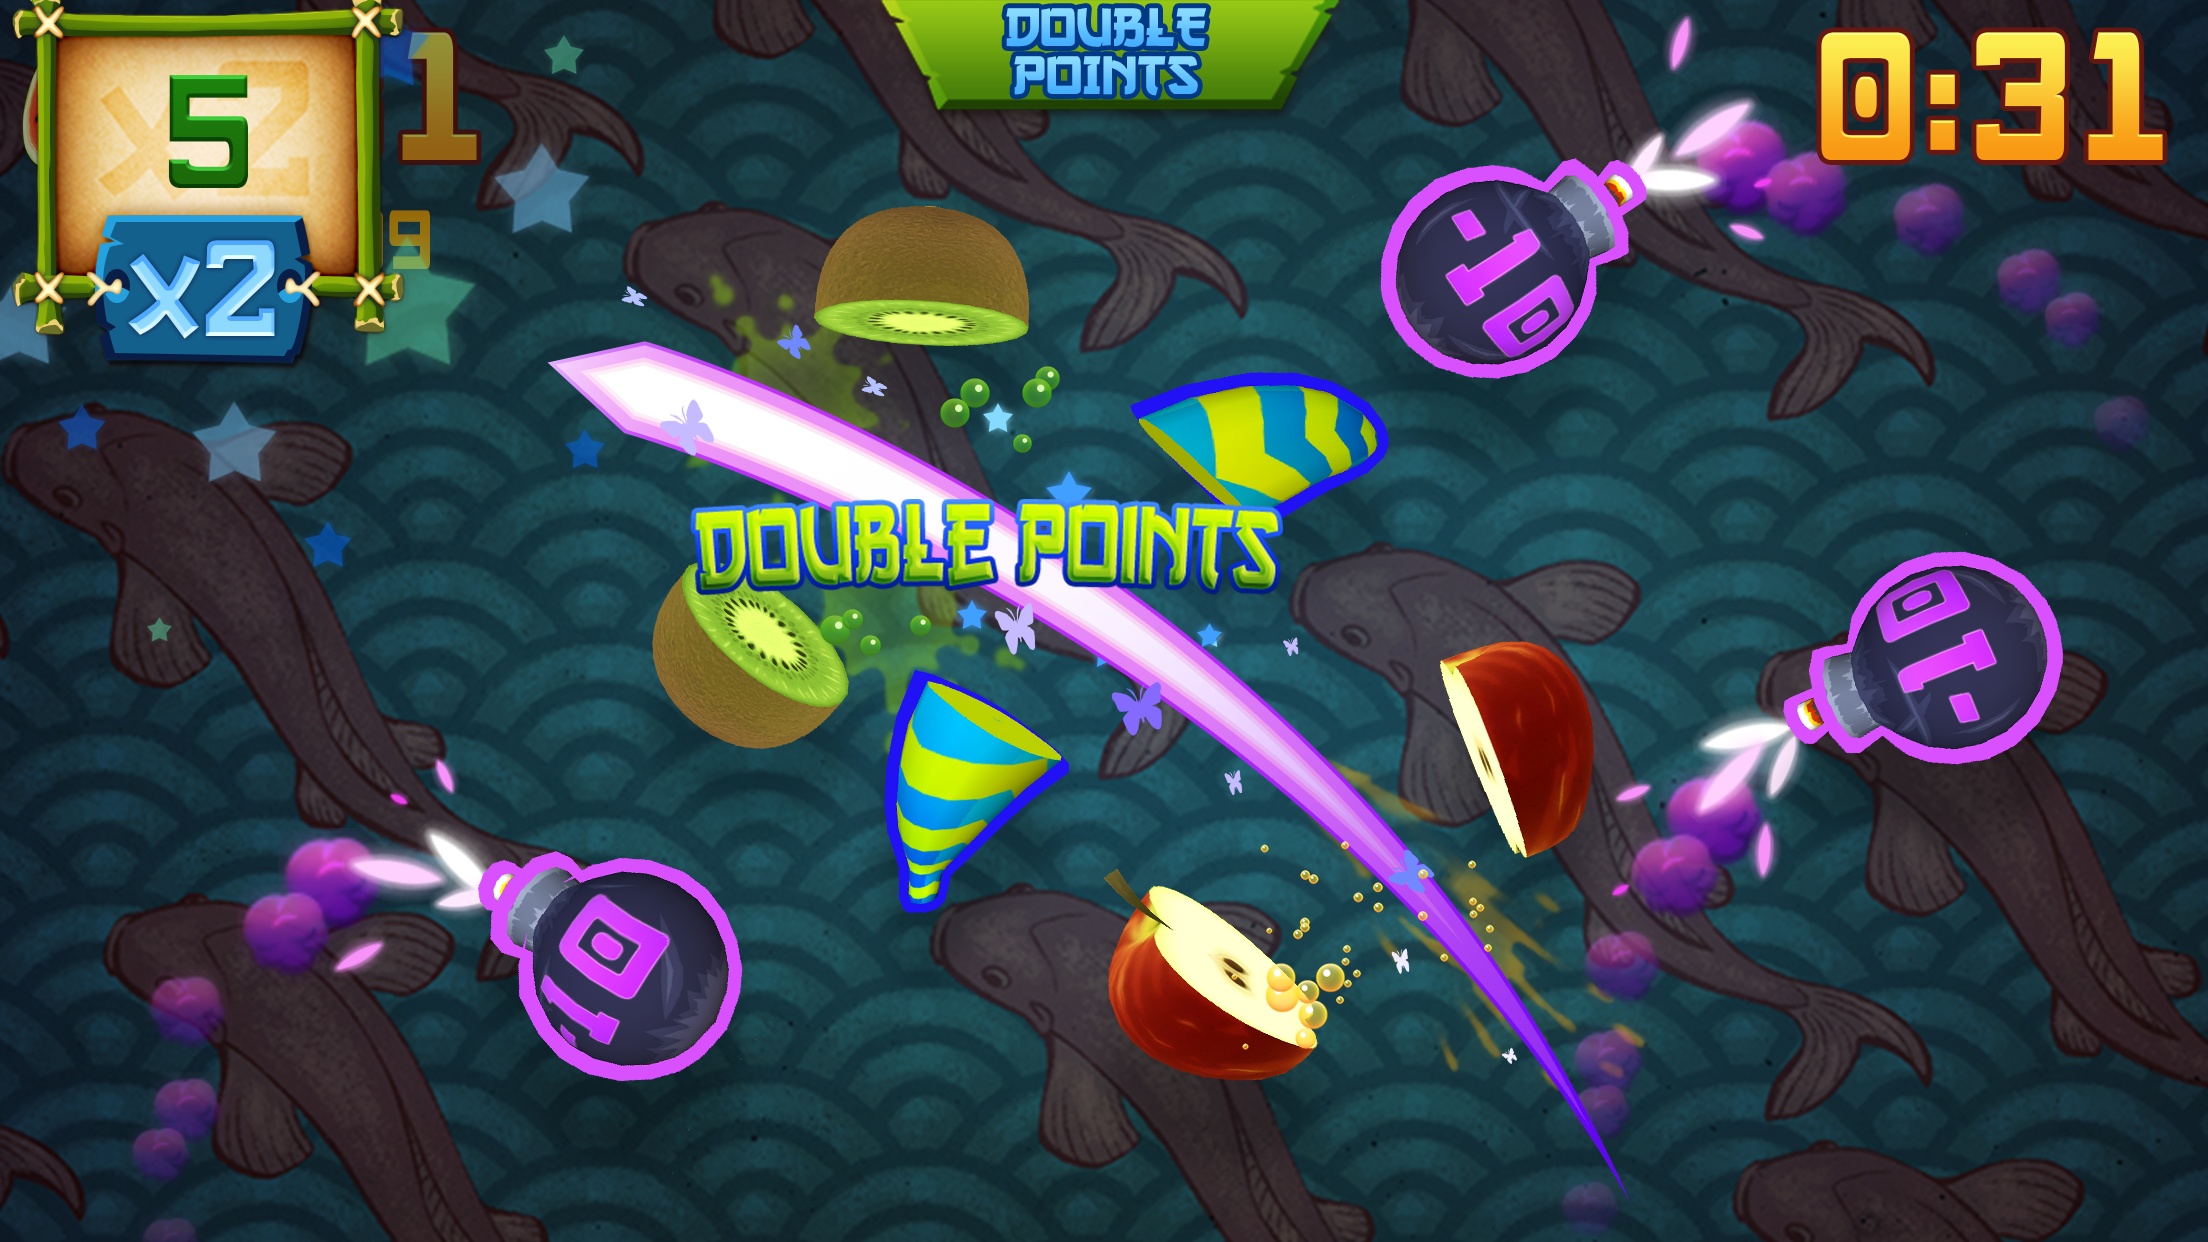 Screenshot of Fruit Ninja Classic+